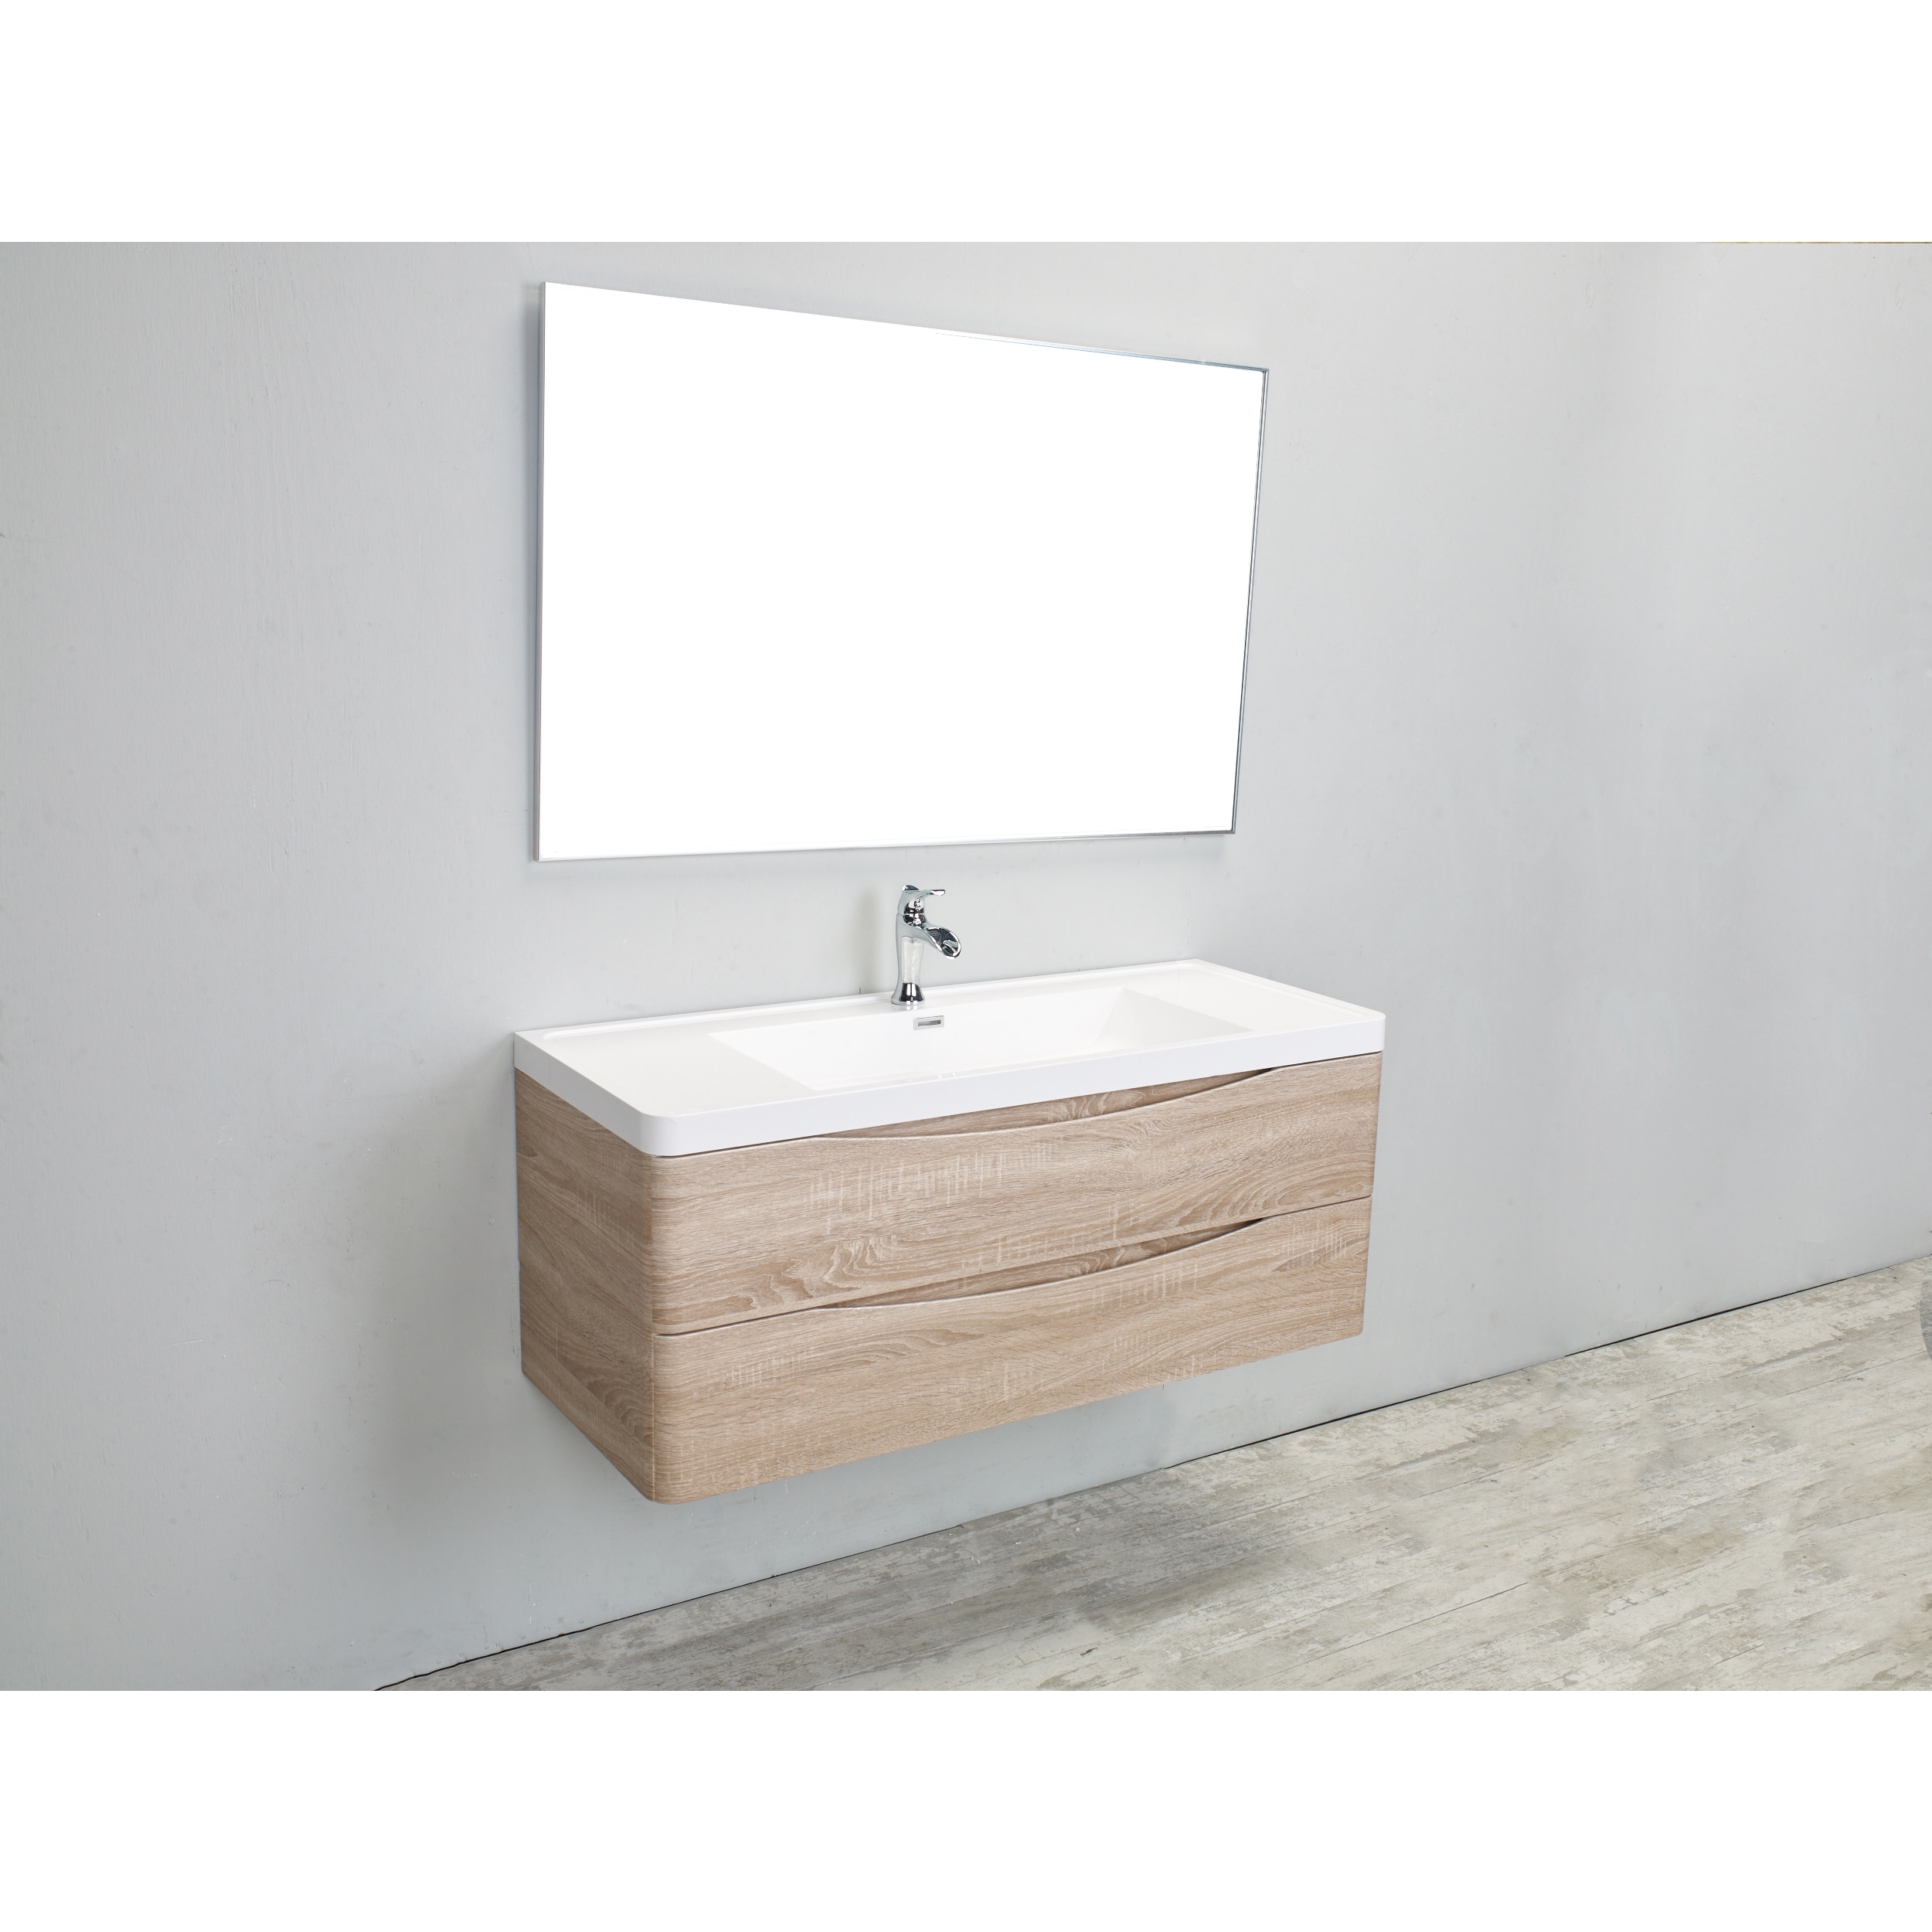 https://ak1.ostkcdn.com/images/products/13934794/Eviva-Smile-48-White-Oak-Modern-Bathroom-Vanity-Set-with-Integrated-White-Acrylic-Single-Sink-Wall-Mount-20509157-57cb-4456-ba61-e0ae09896598.jpg